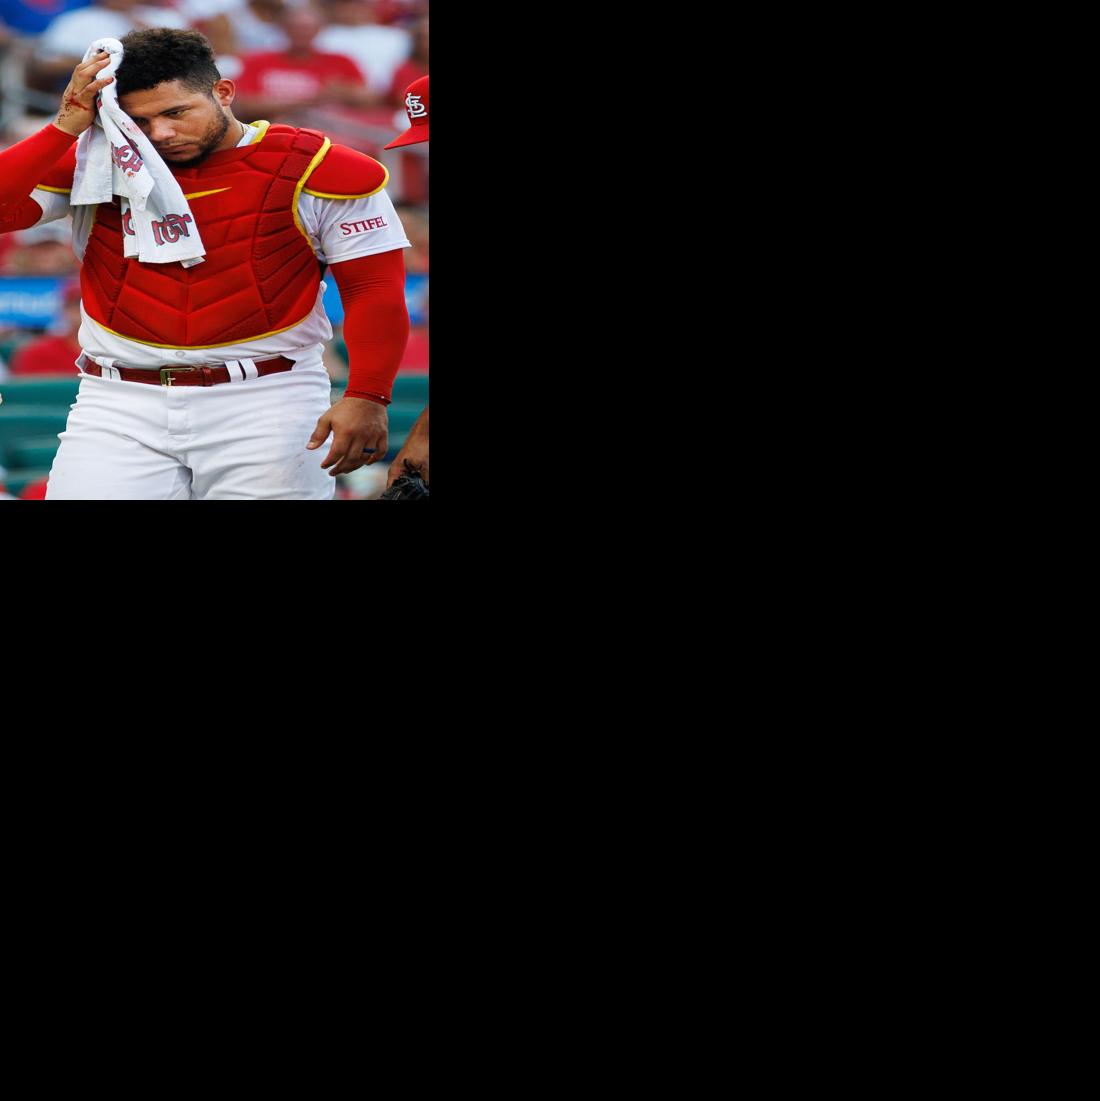 Lars Nootbaar's hitting profile reminiscent of a former Cardinals slugger:  Cardinals Extra